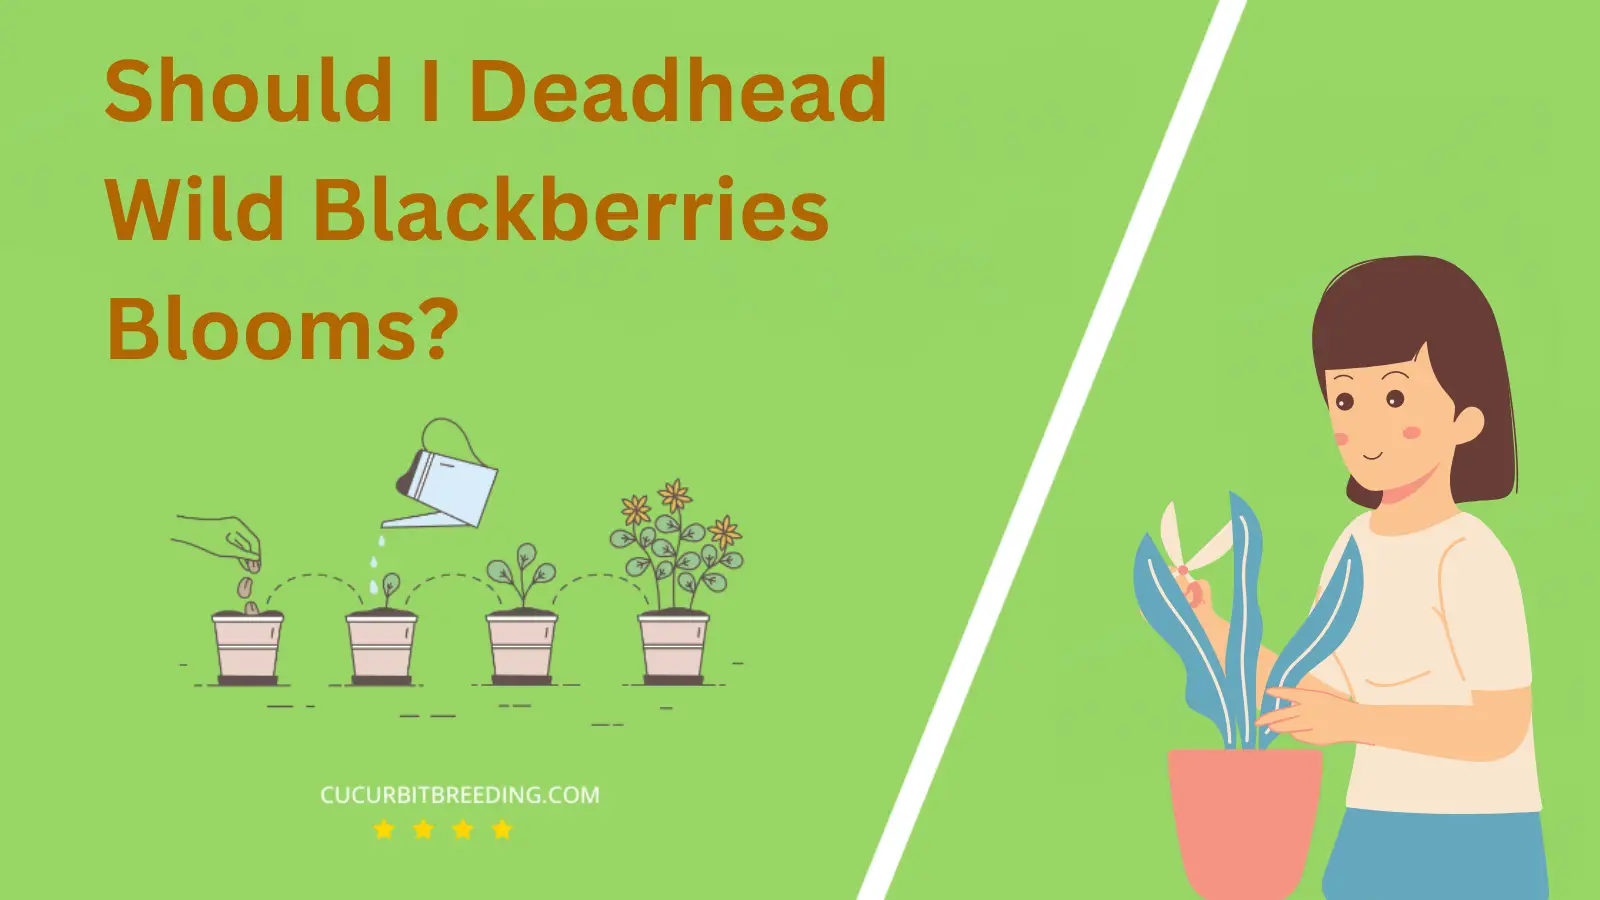 Should I Deadhead Wild Blackberries Blooms?